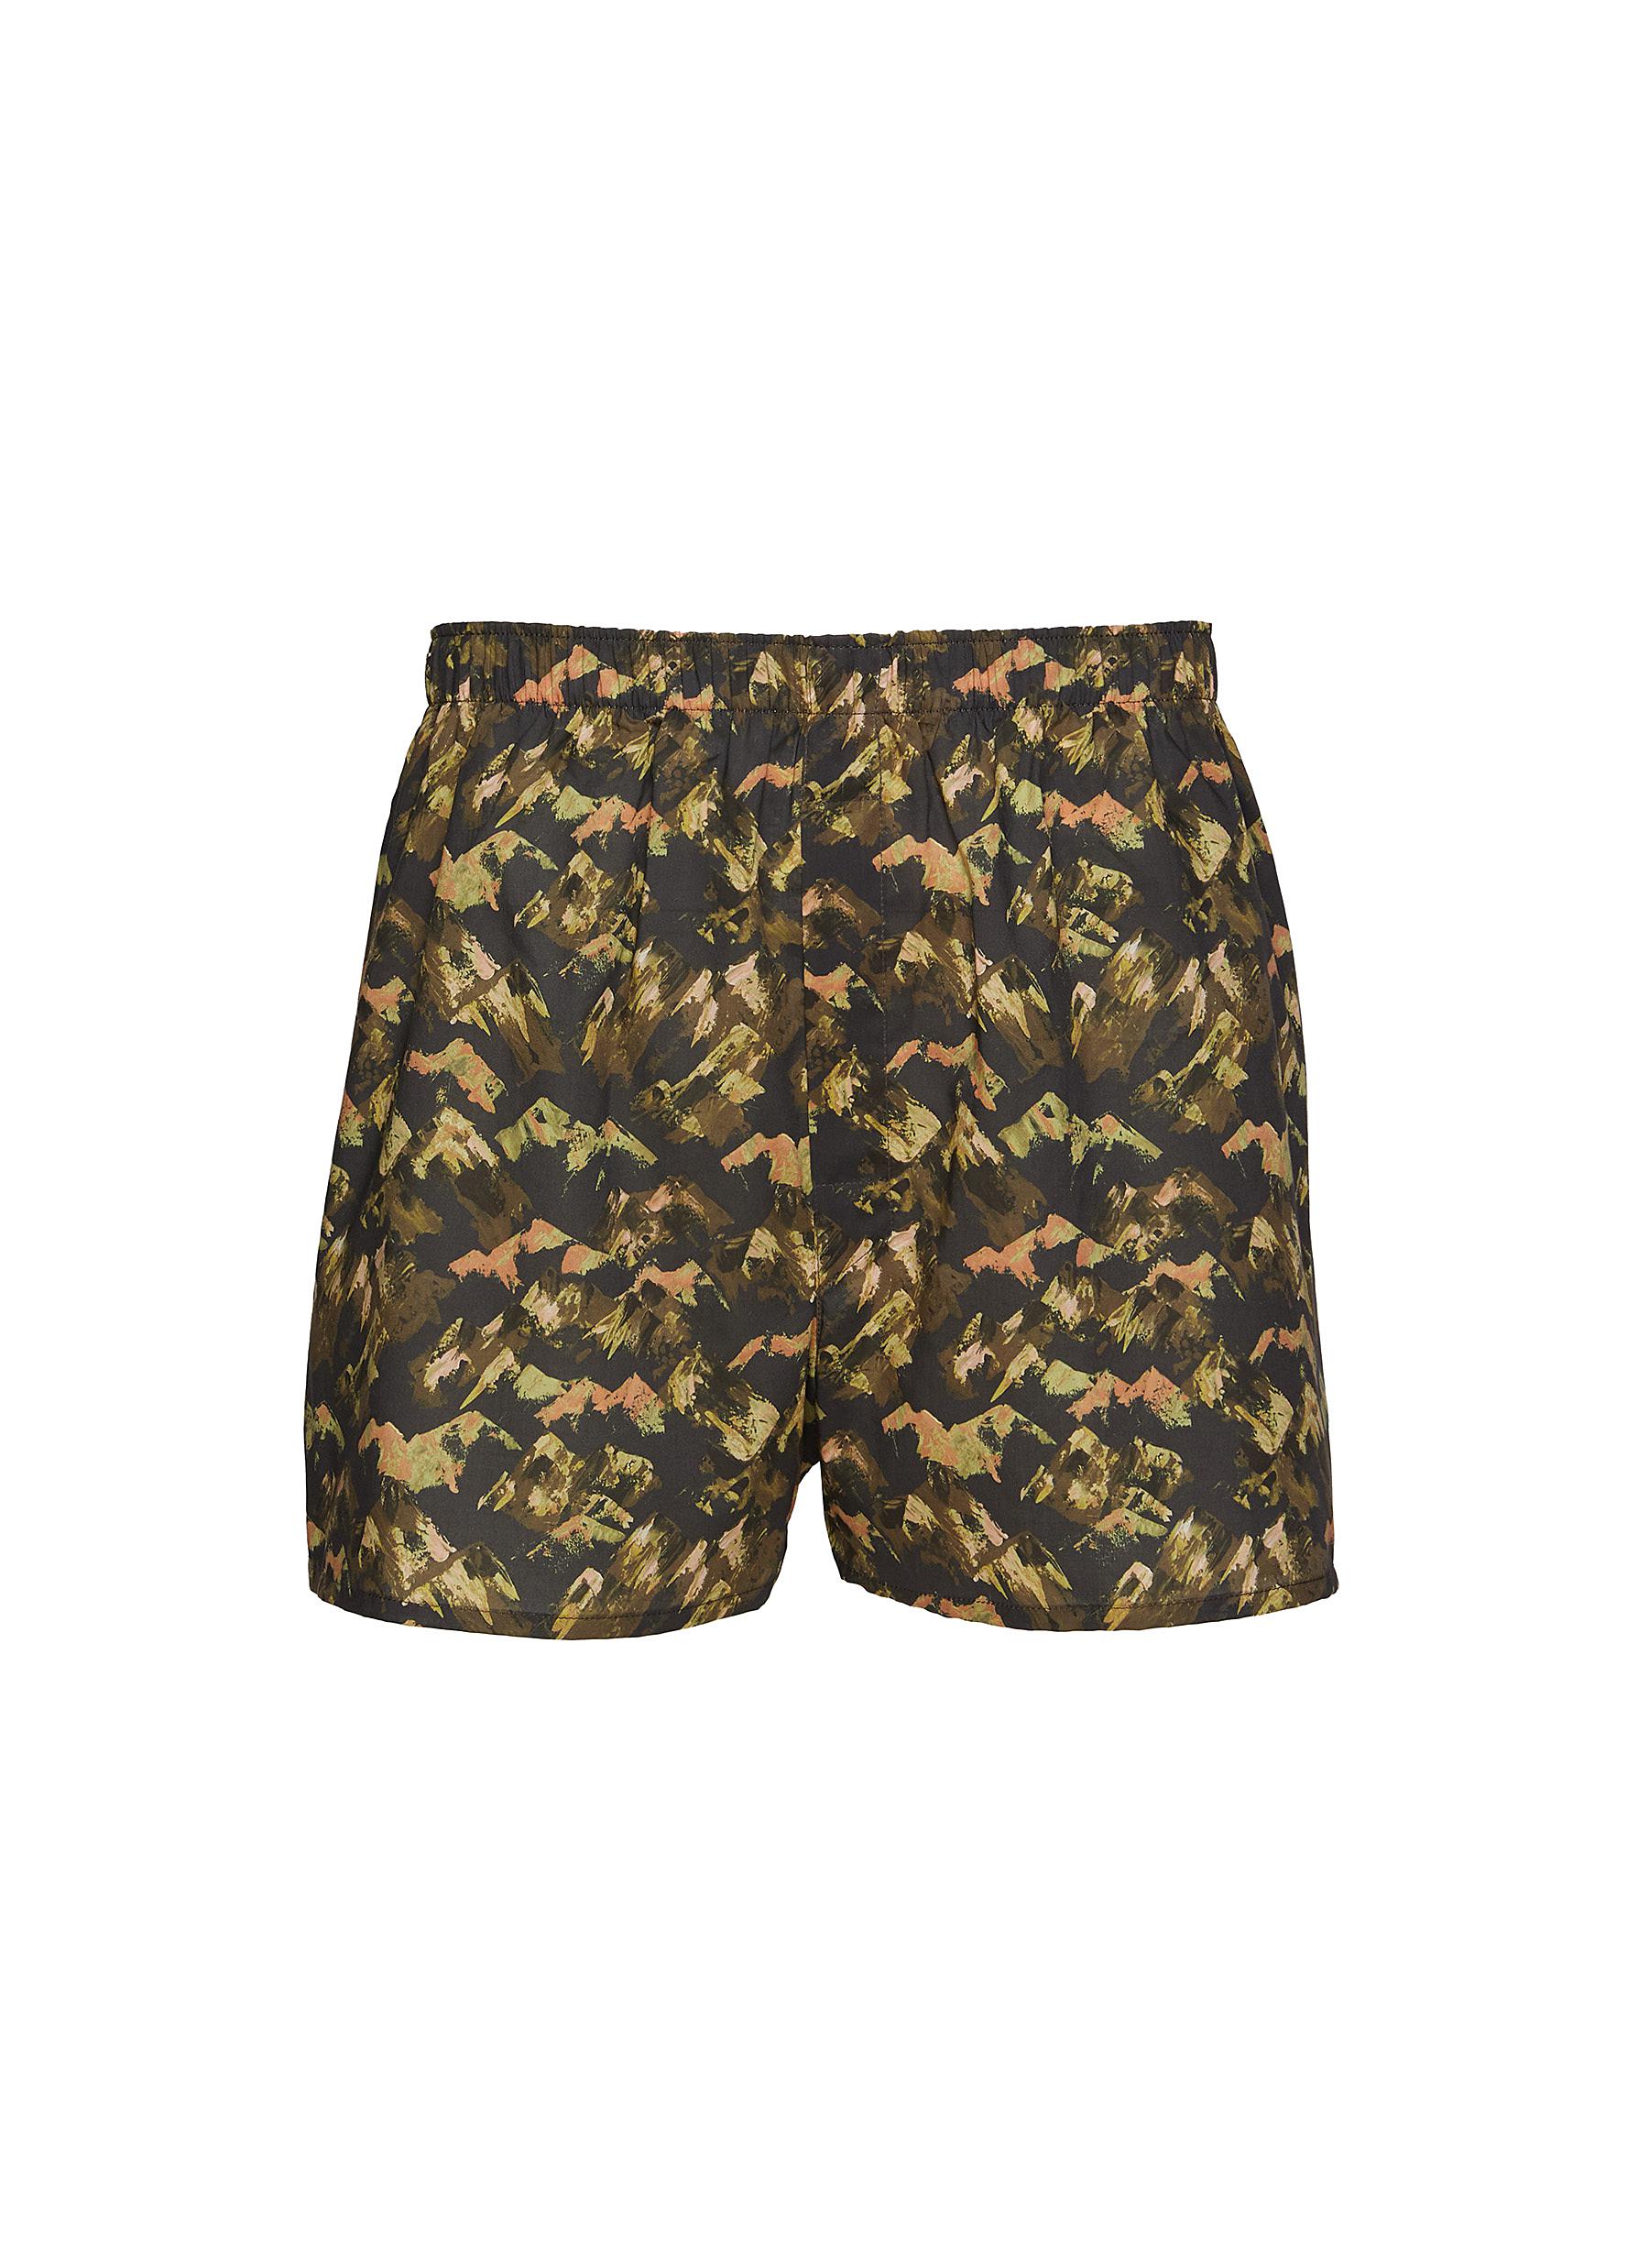 SUNSPEL, Mount Olympus Print Cotton Boxer Shorts, Men